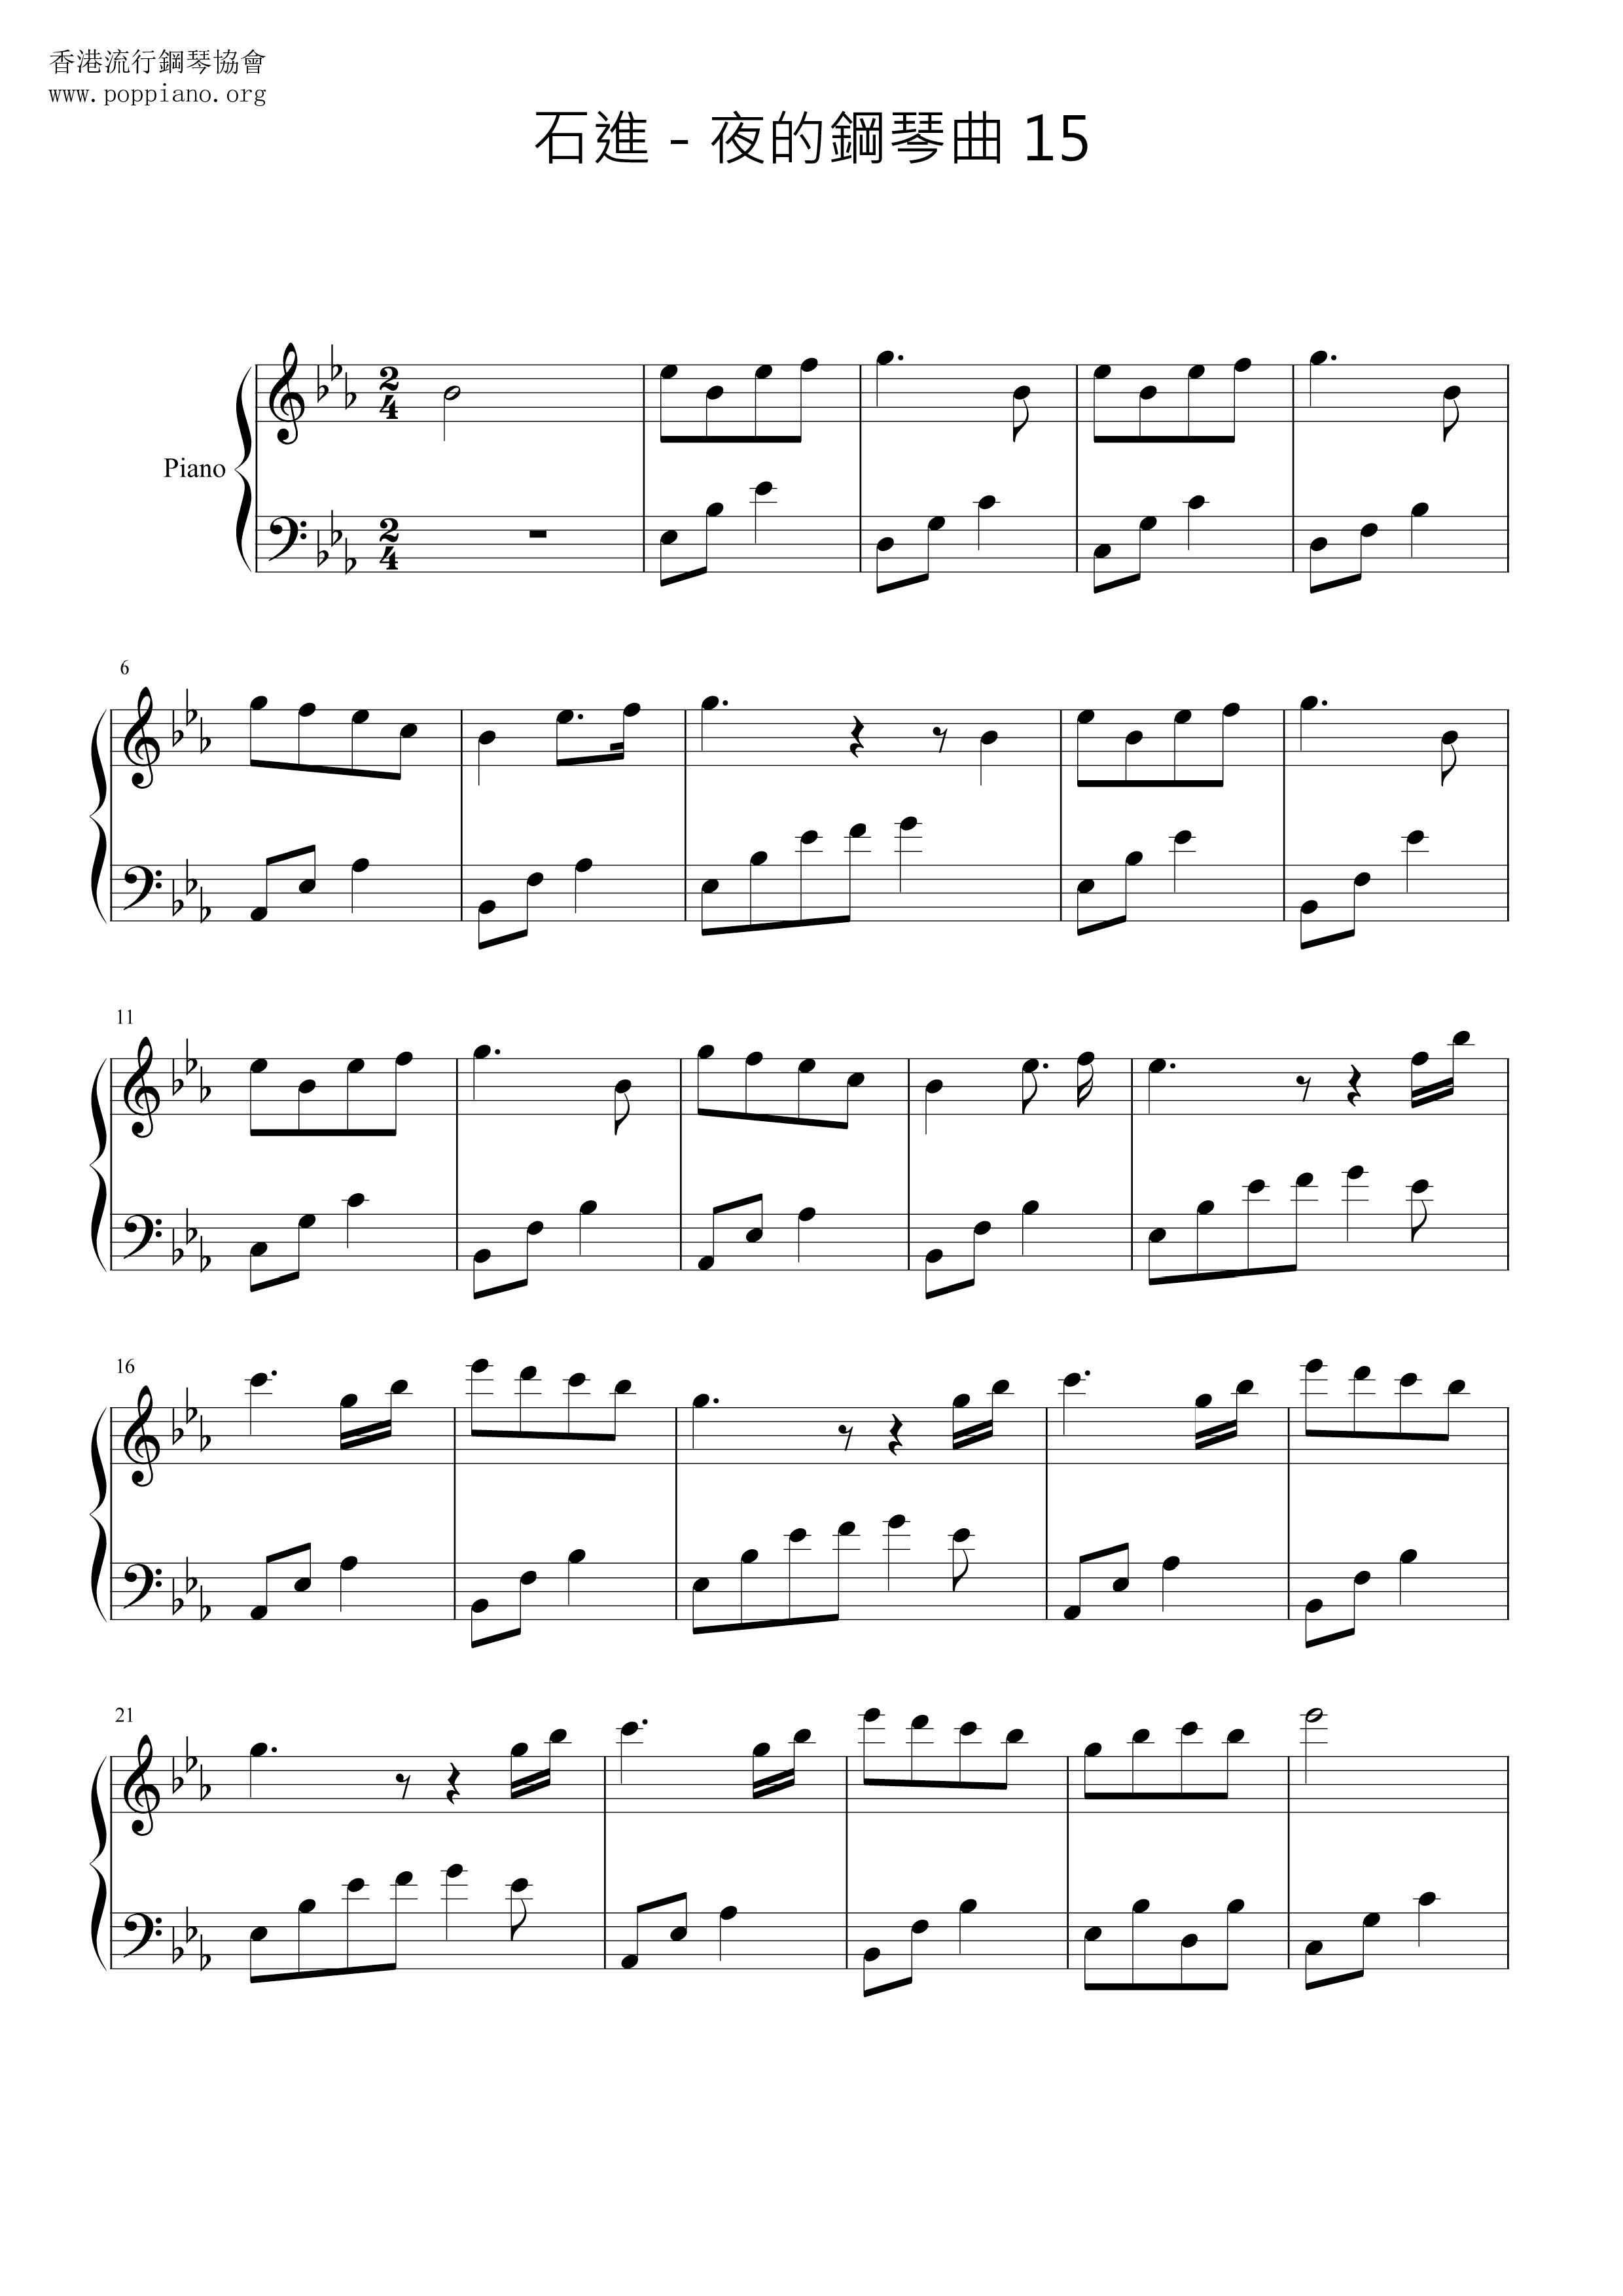 Melody Of The Night 15 Score